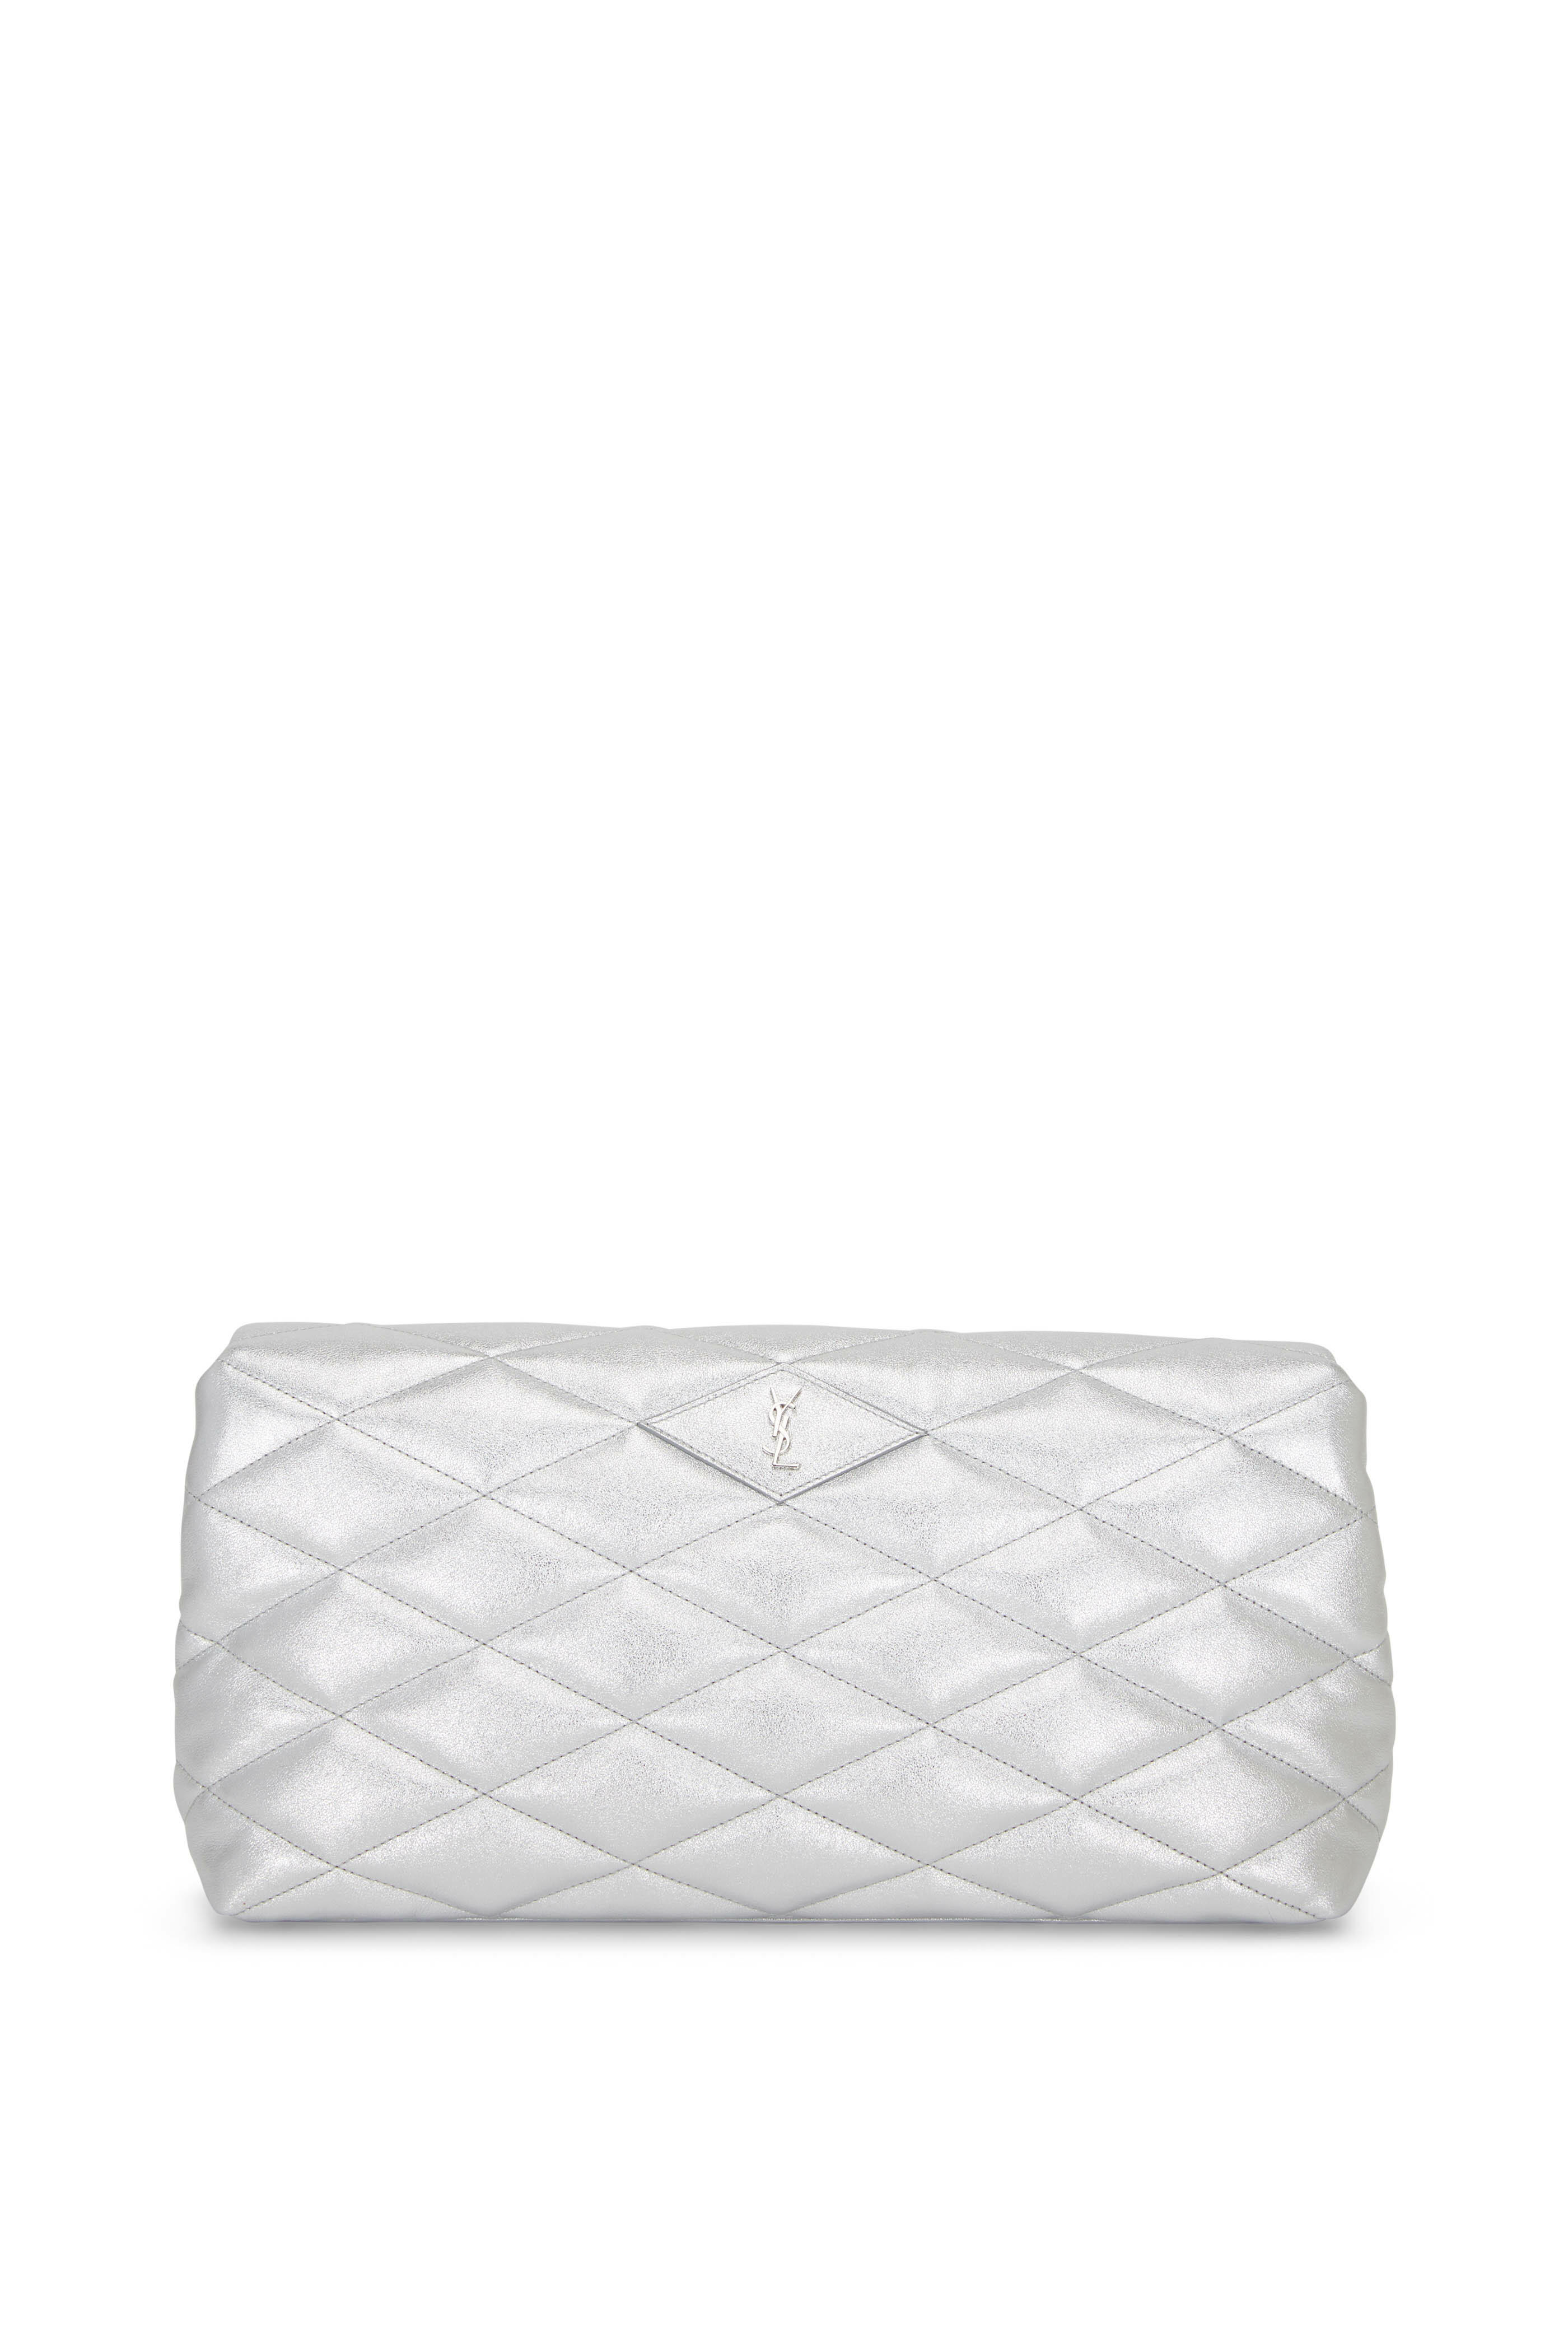 Saint Laurent Sade Puffer Envelope Clutch Bag - White - One Size